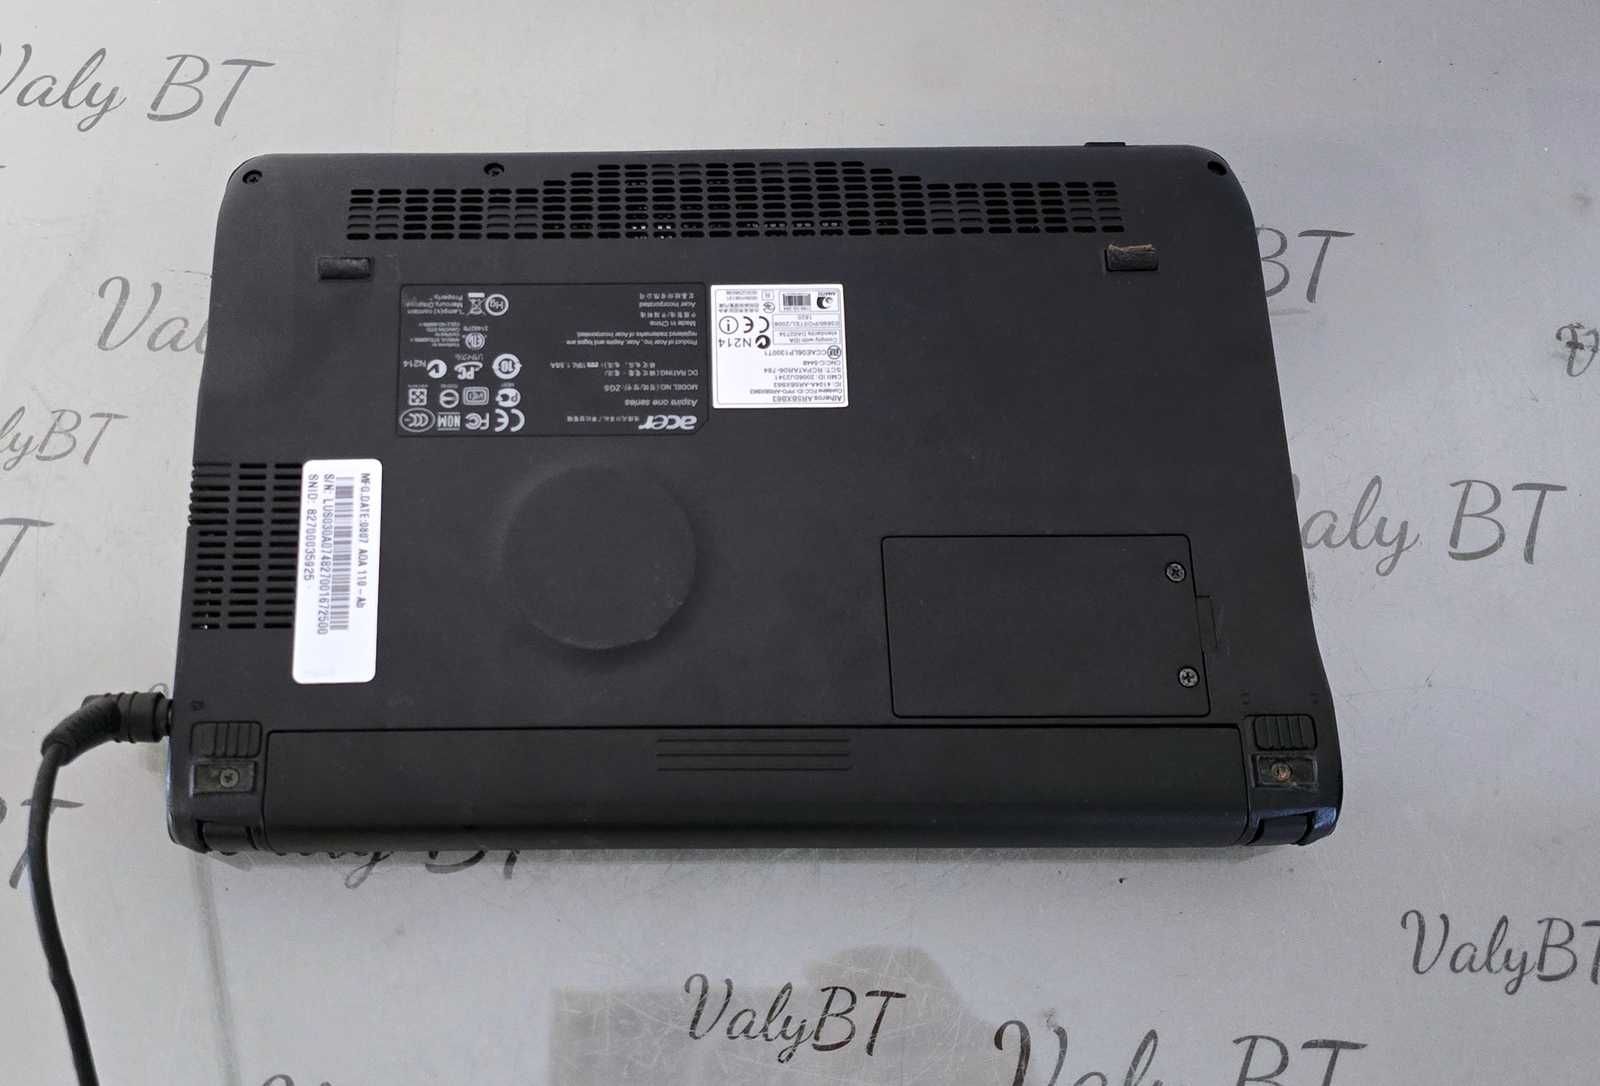 Laptop miniAcer Aspire One ZG5 Blue - 10 inch - functional instalat